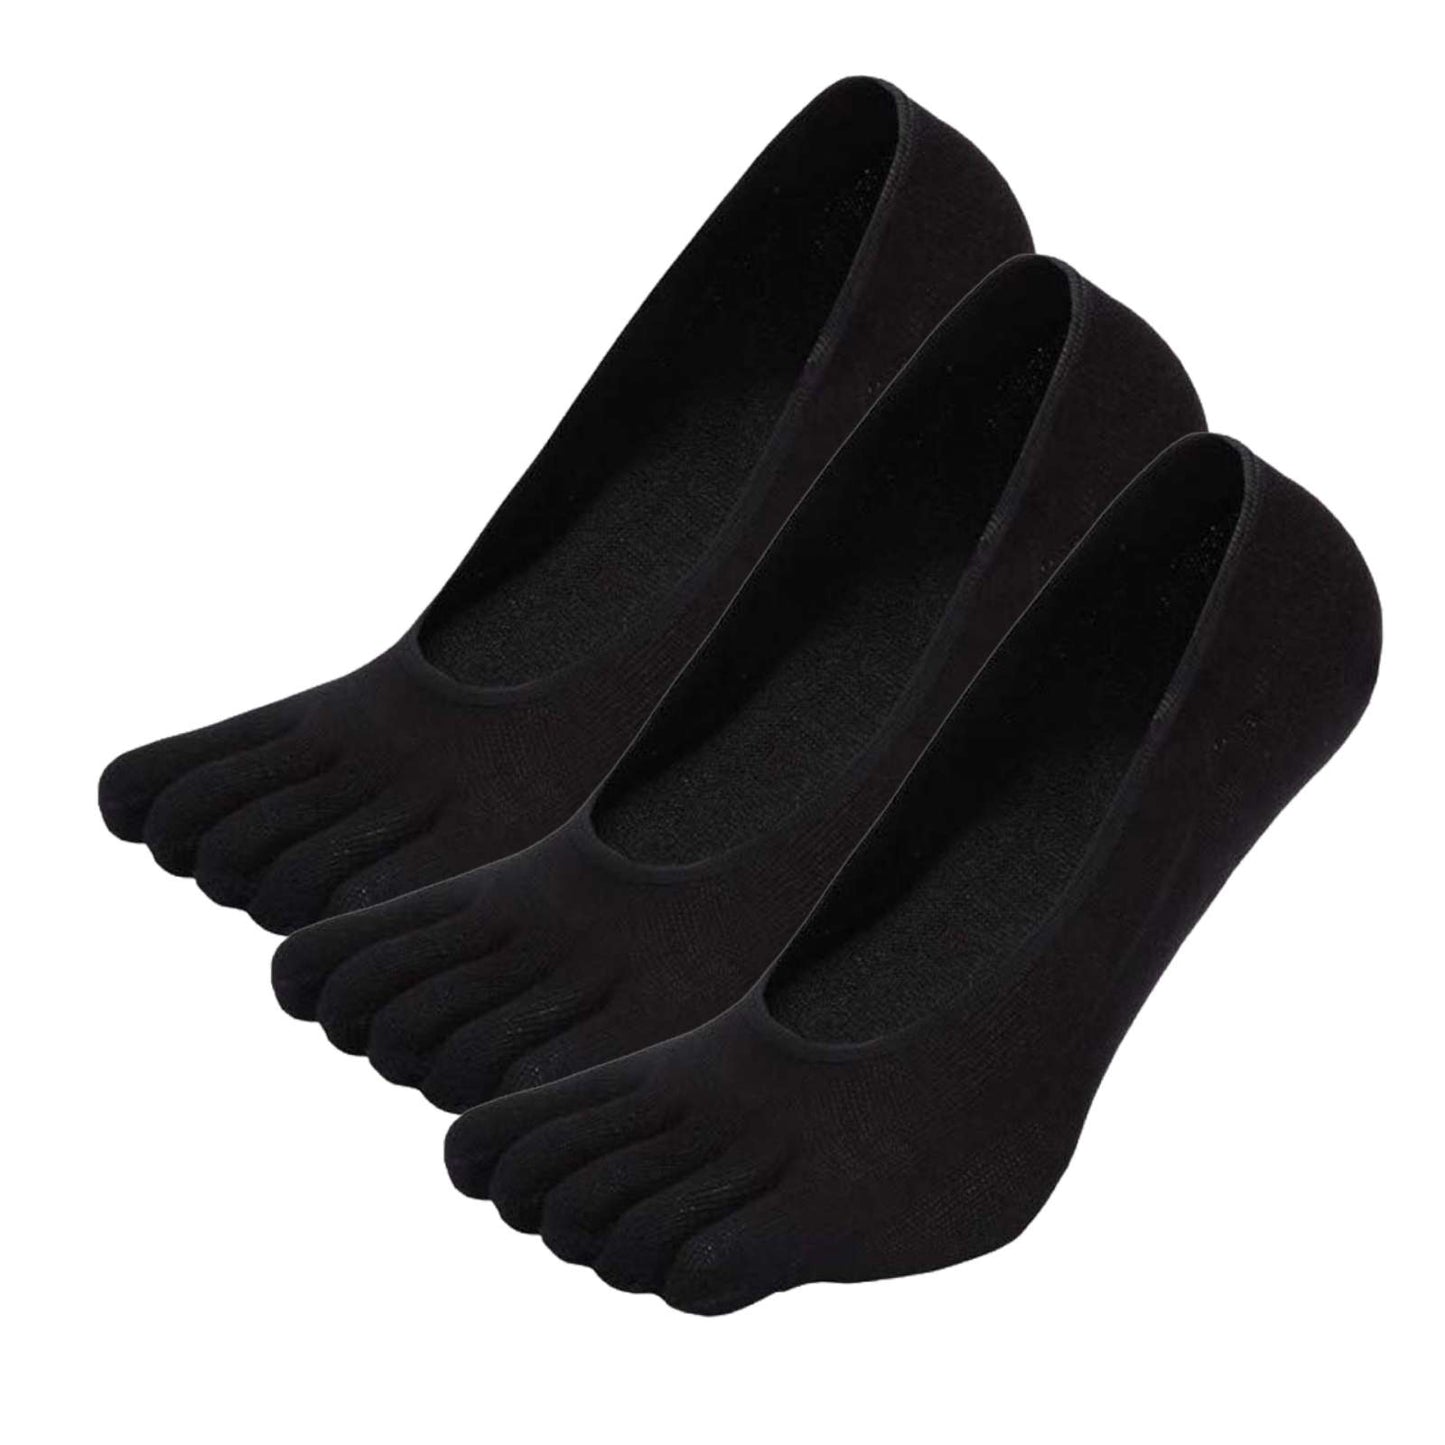  Meaiguo Toe Socks No Show Cotton Low Cut Five Finger